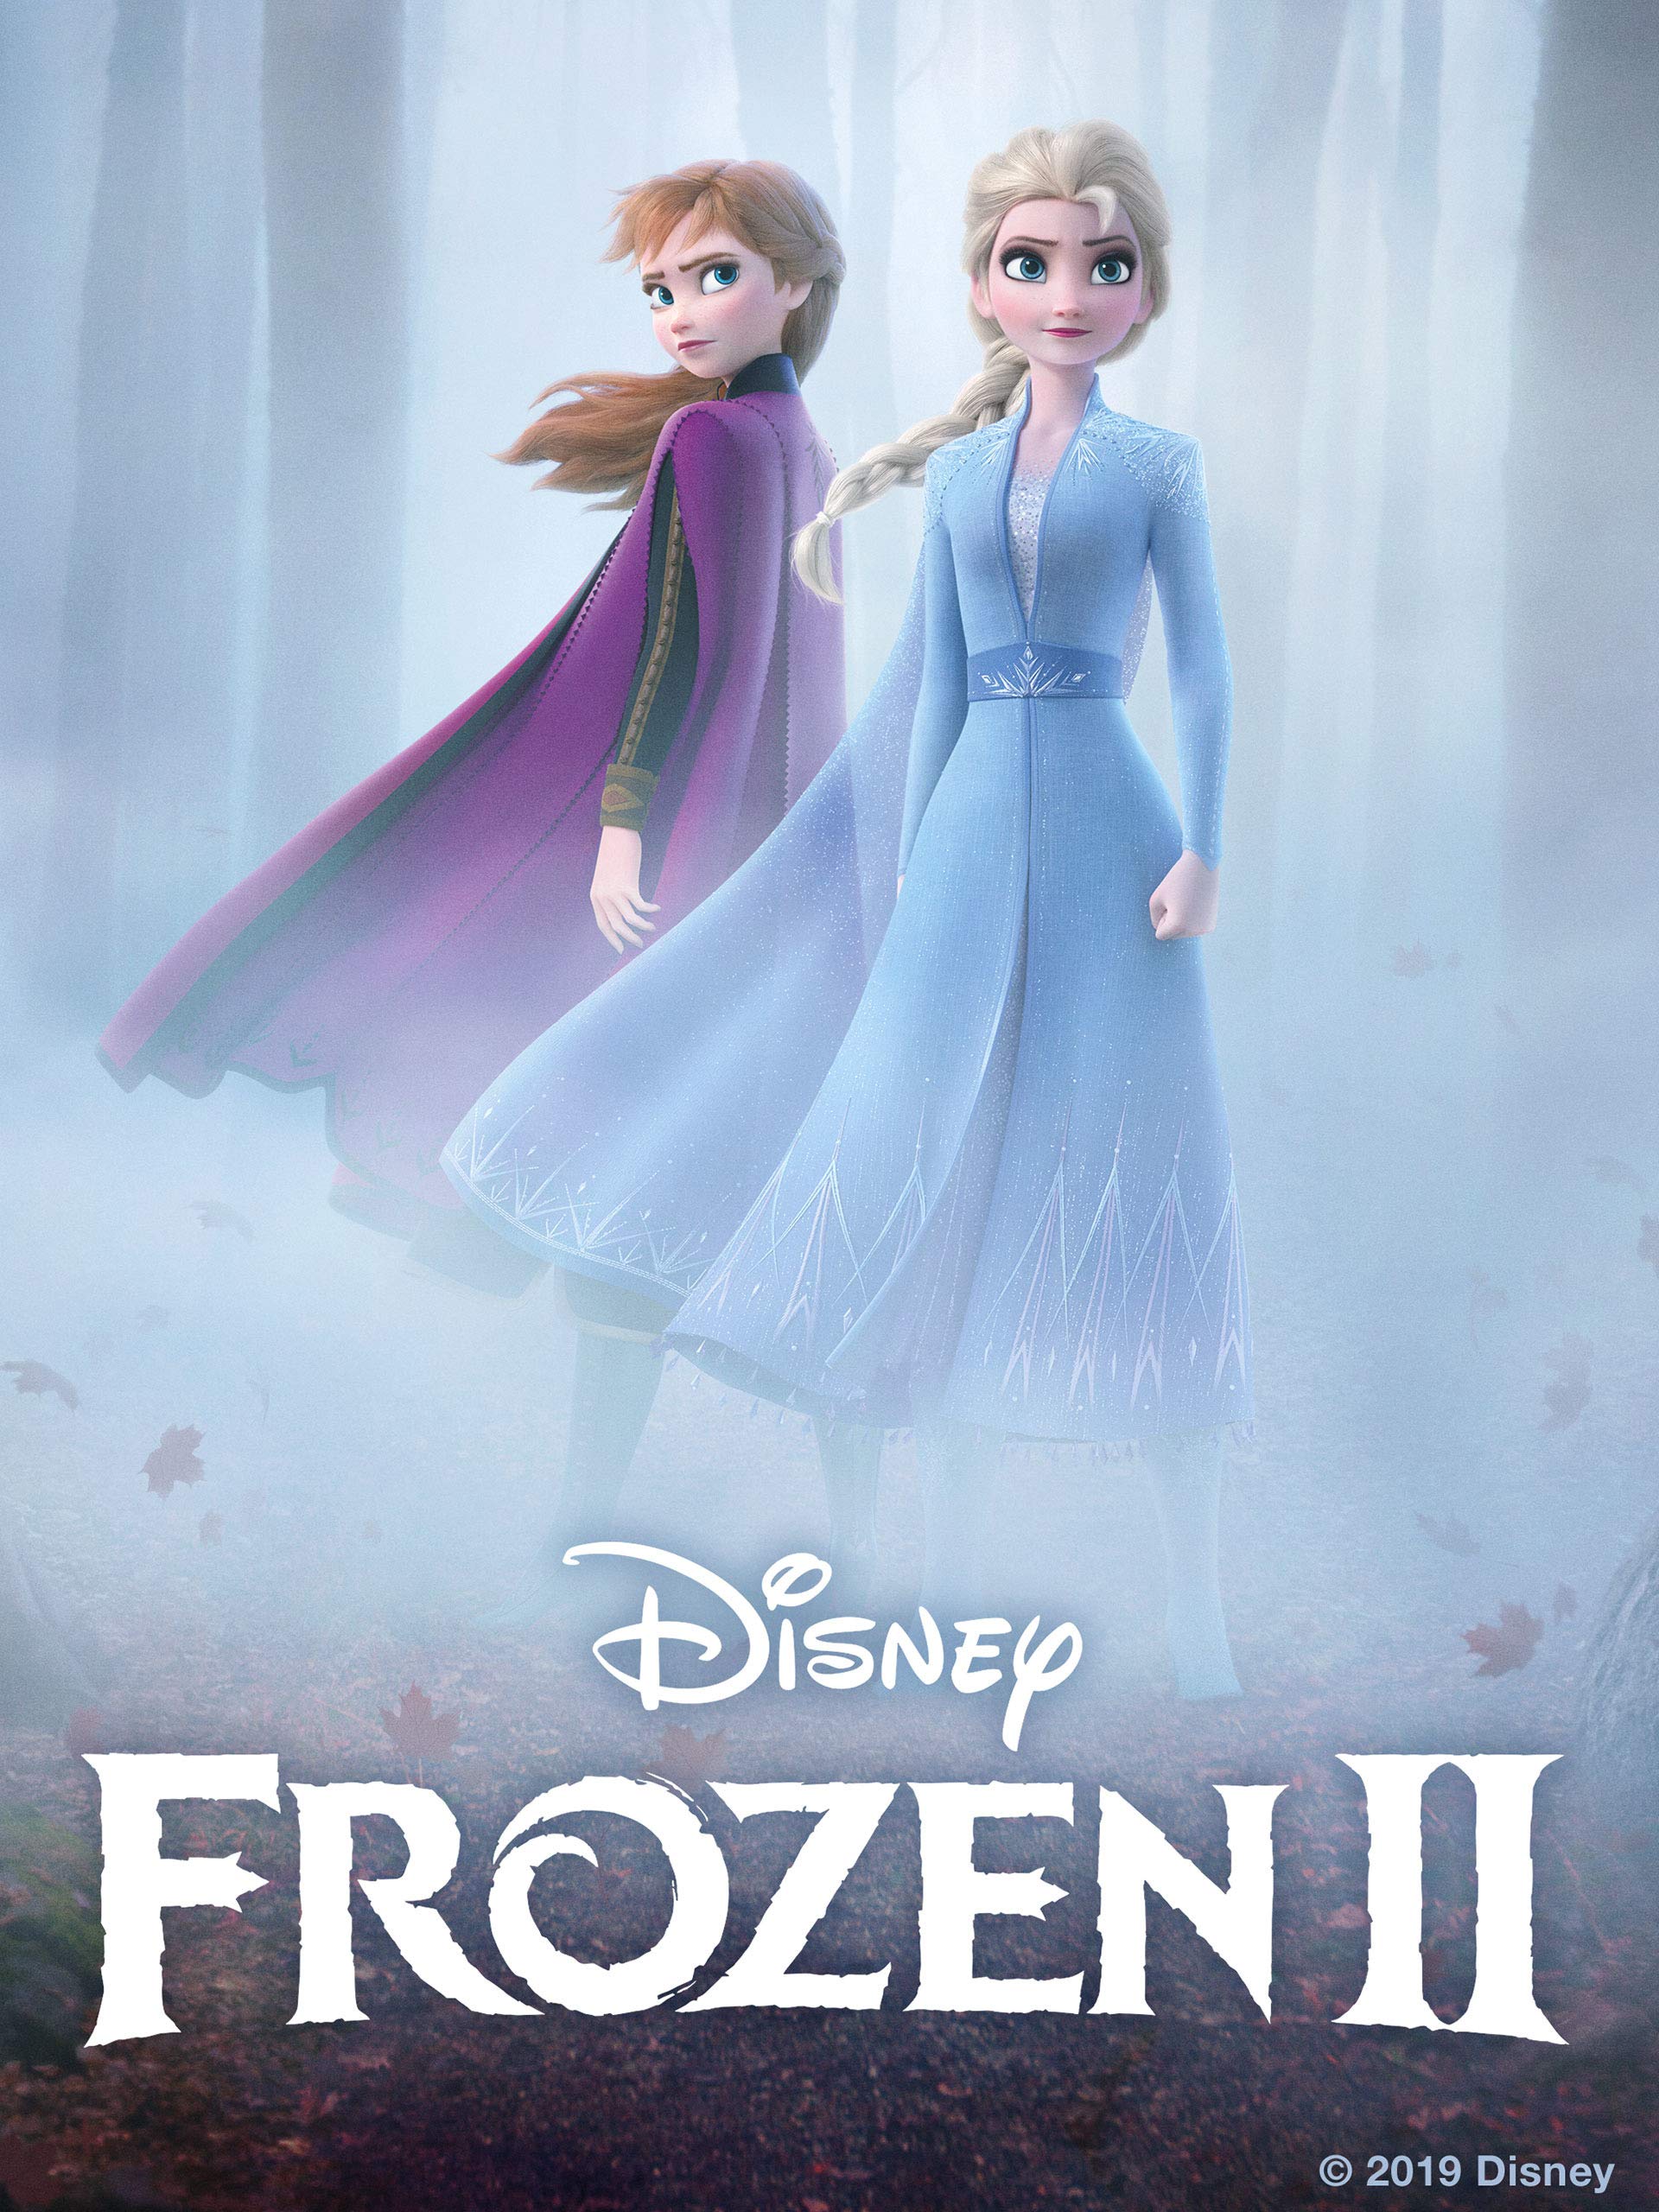 Disney’s “Frozen 2” Arrives Home